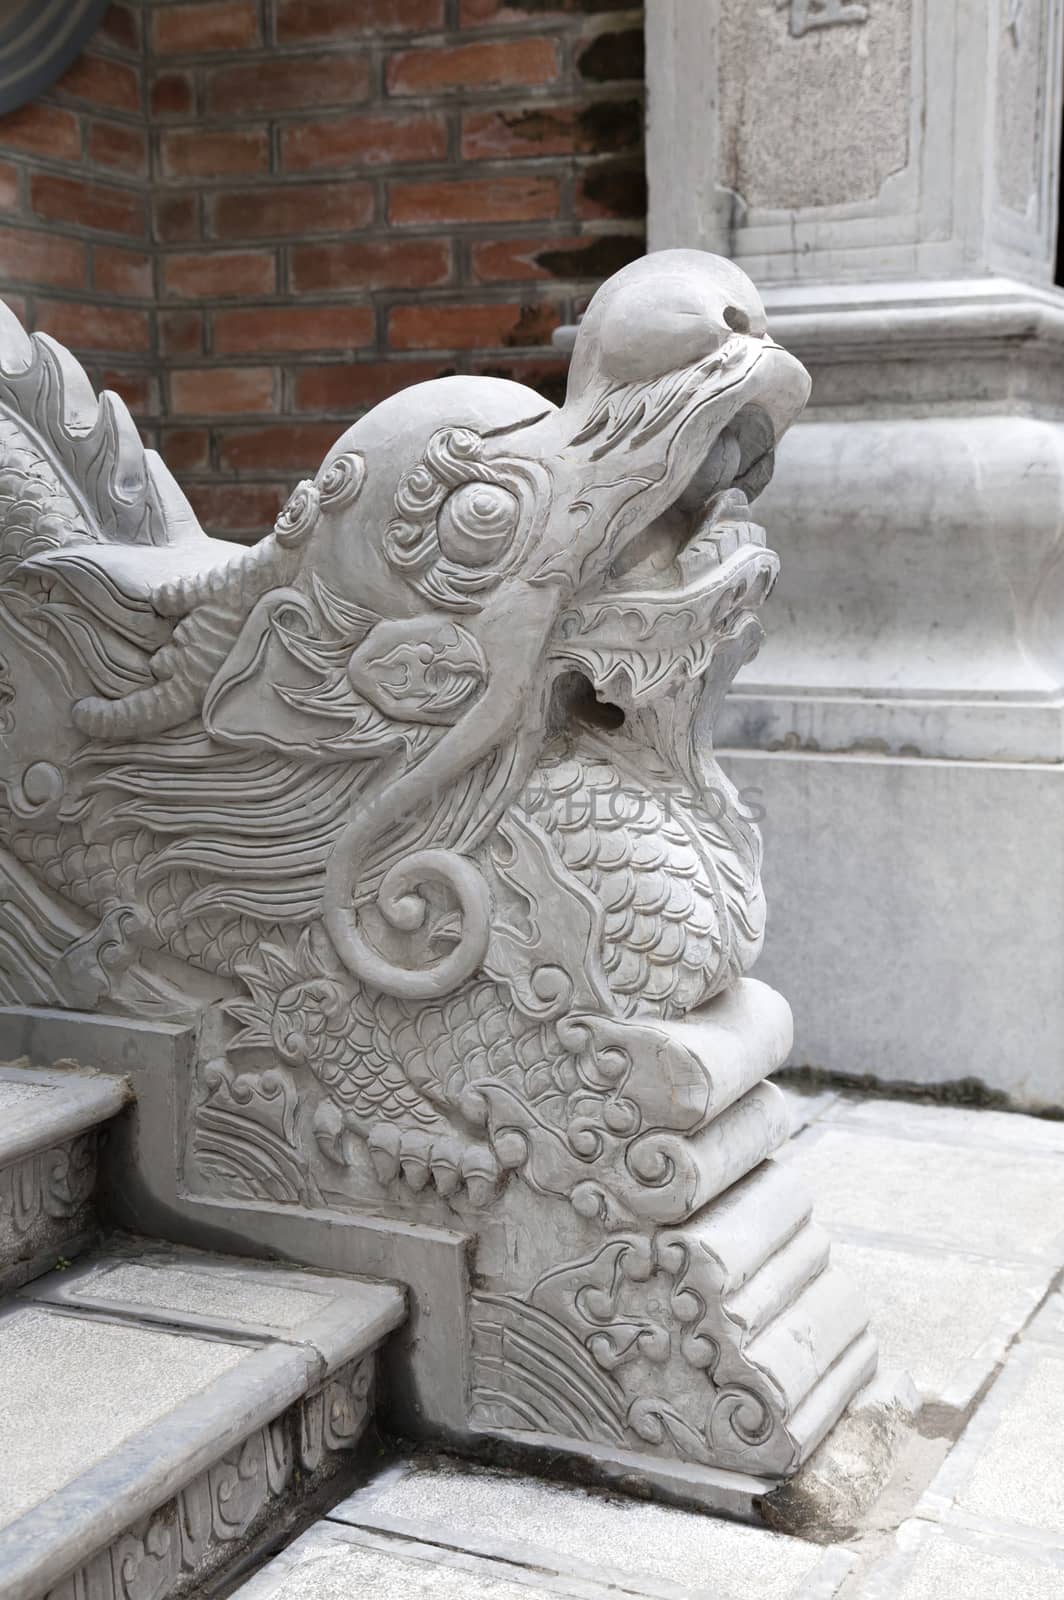 Dragon-shaped handrail in Hanoi, Vietnam by Goodday